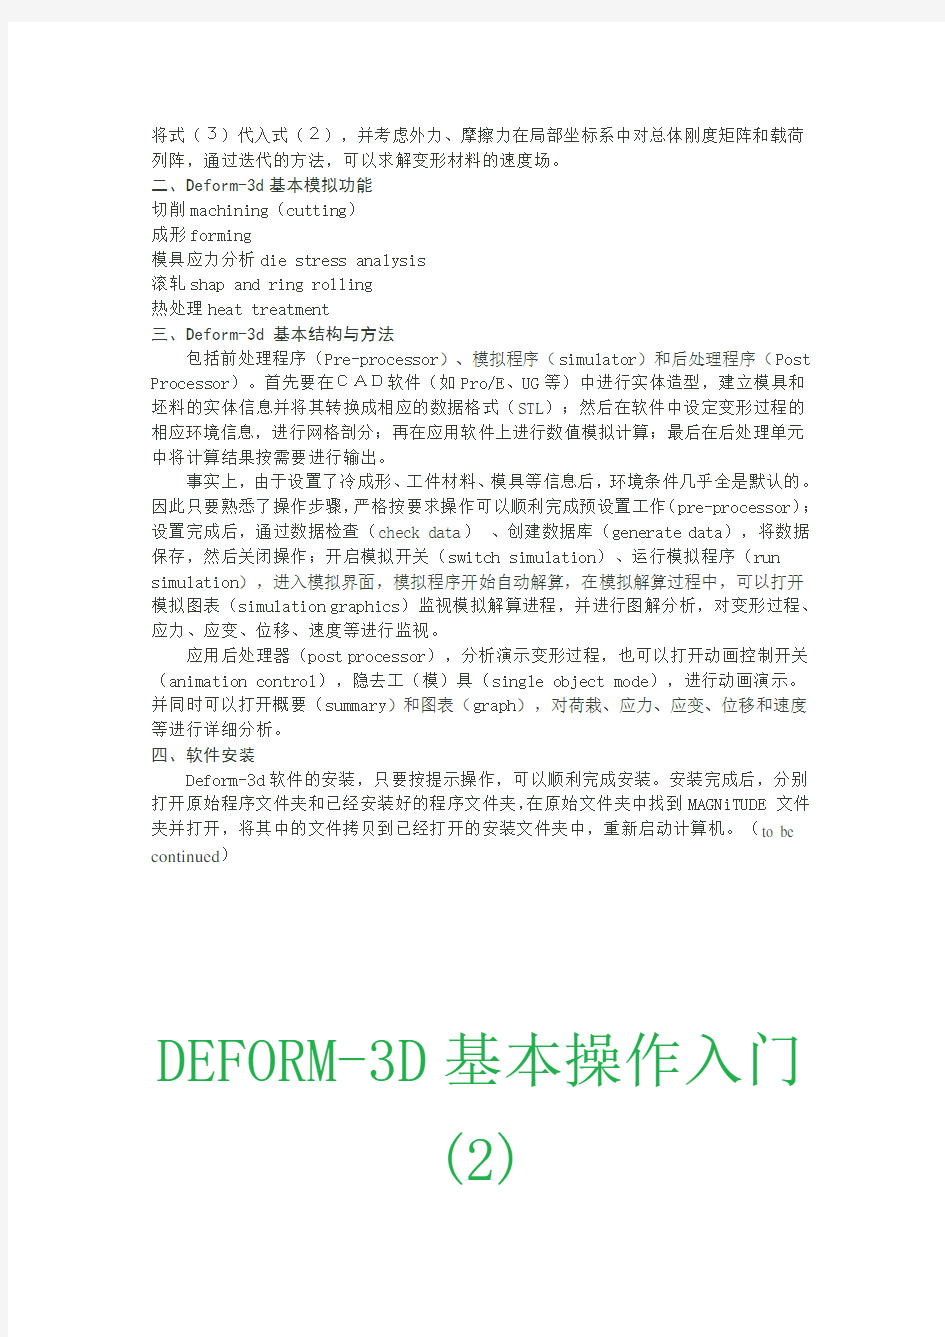 DEFORM-3D基本操作入门